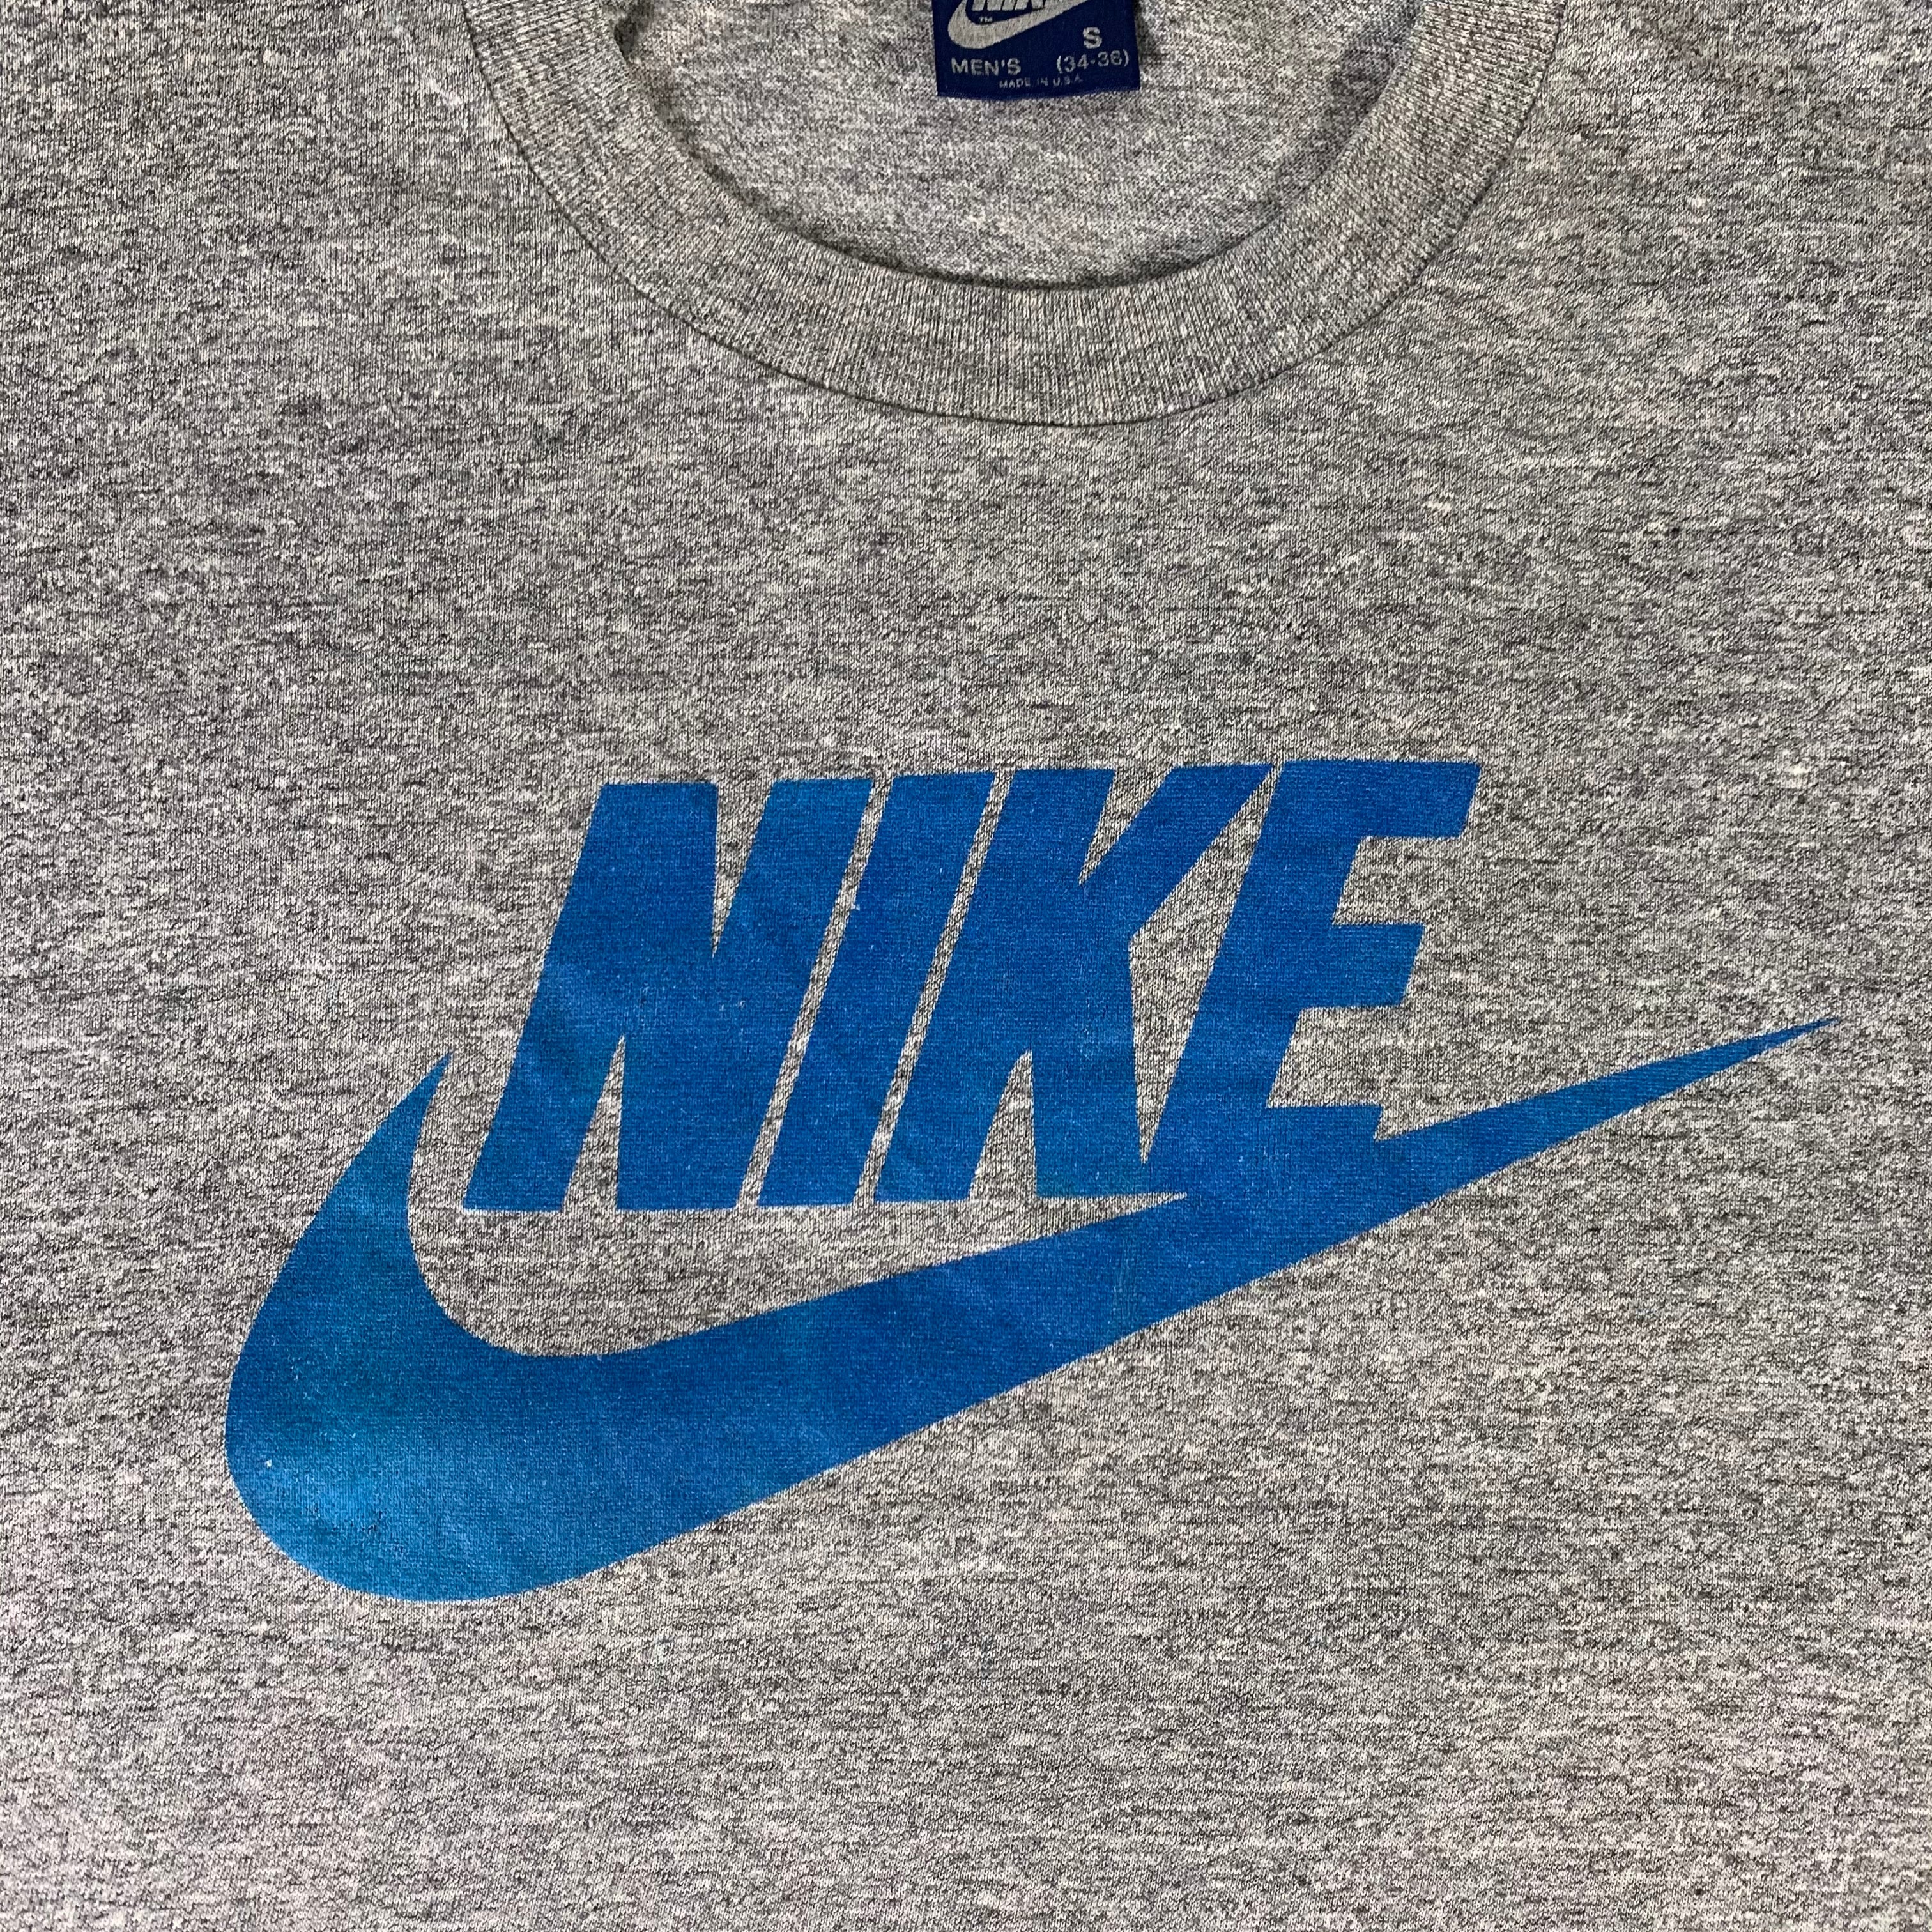 Vintage Nike "Logo" jointcustodydc